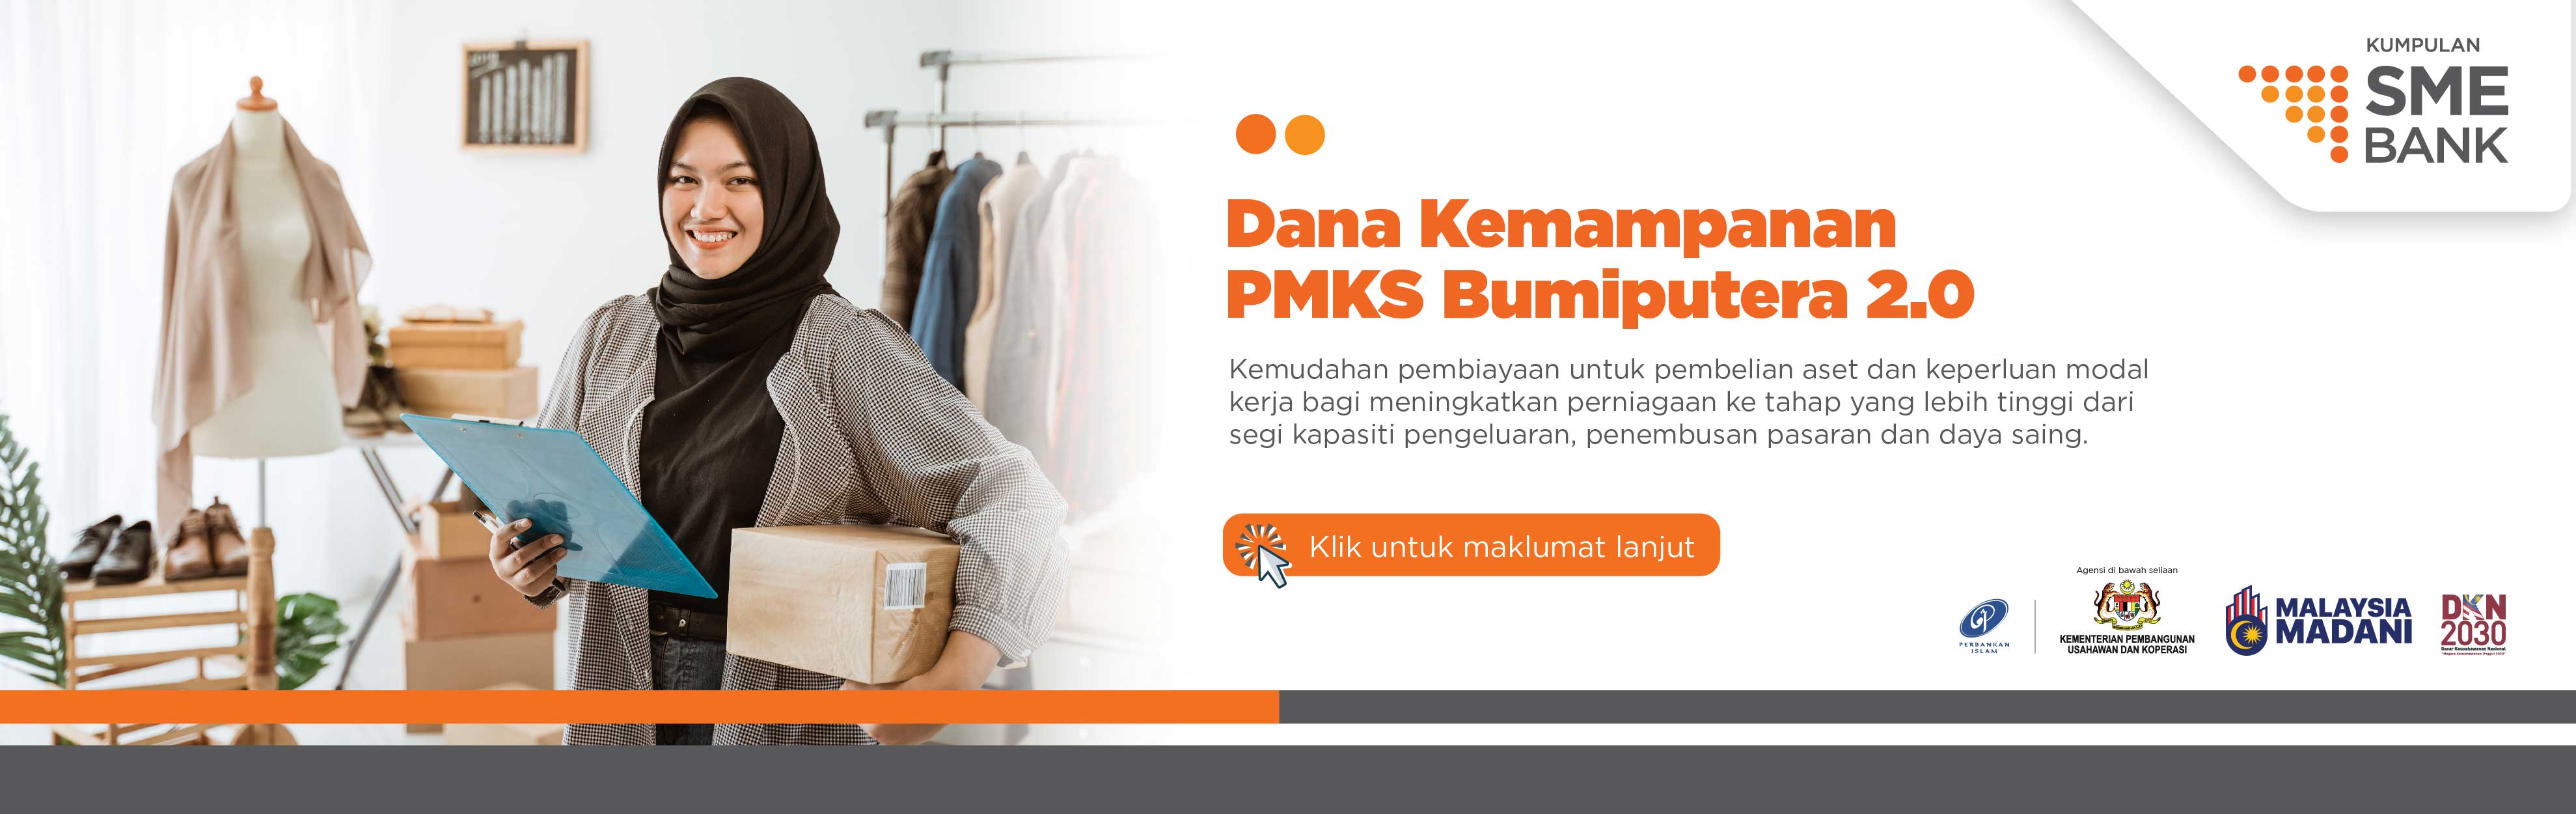 SME Bank: Dana Kemampanan PMKS Bumiputera 2.0 (DKPB 2.0)